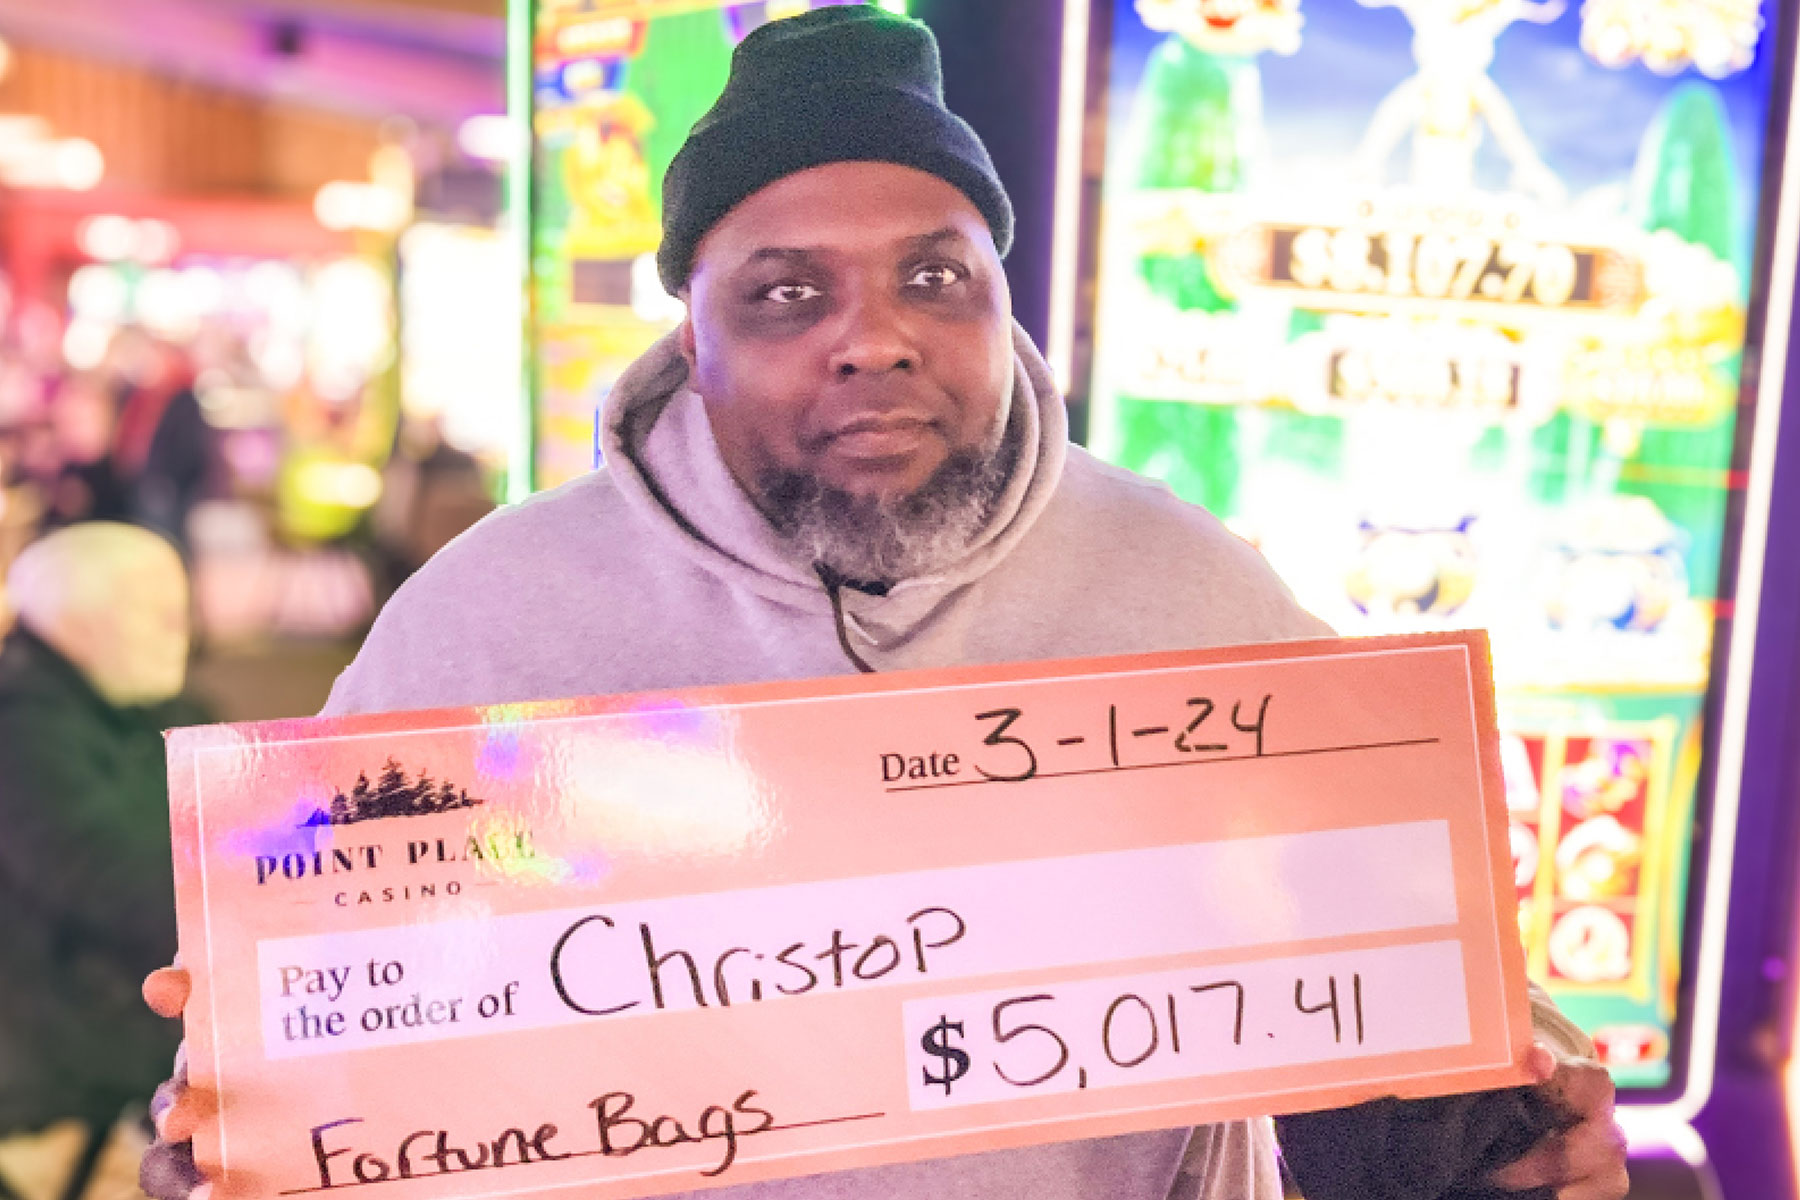 Christop won $5,017